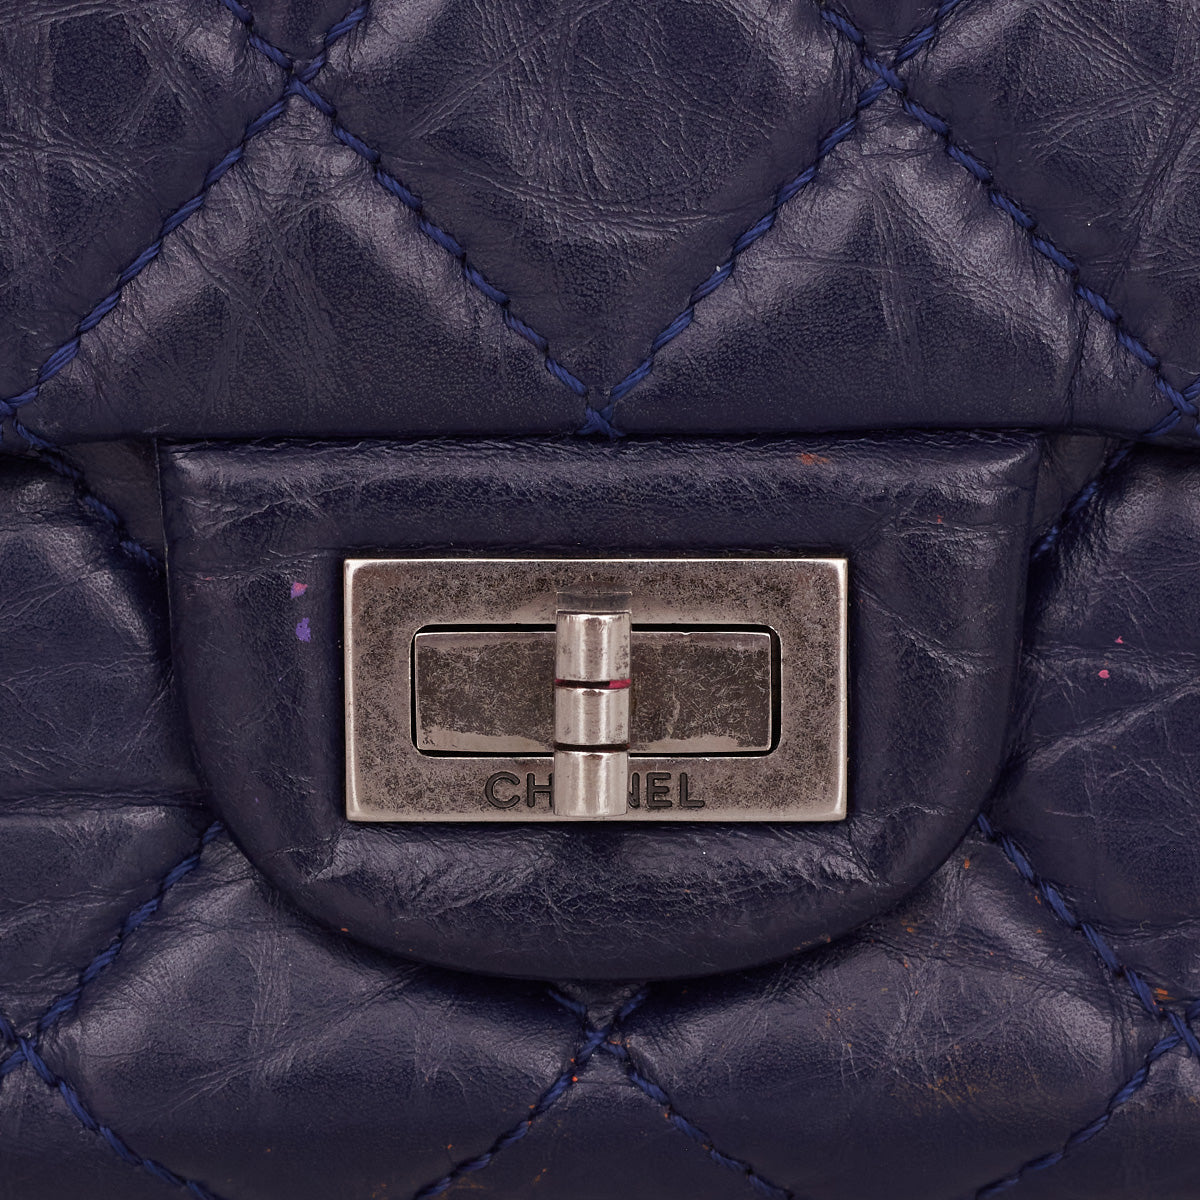 Bolsa Chanel 2.55 Azul Marinho